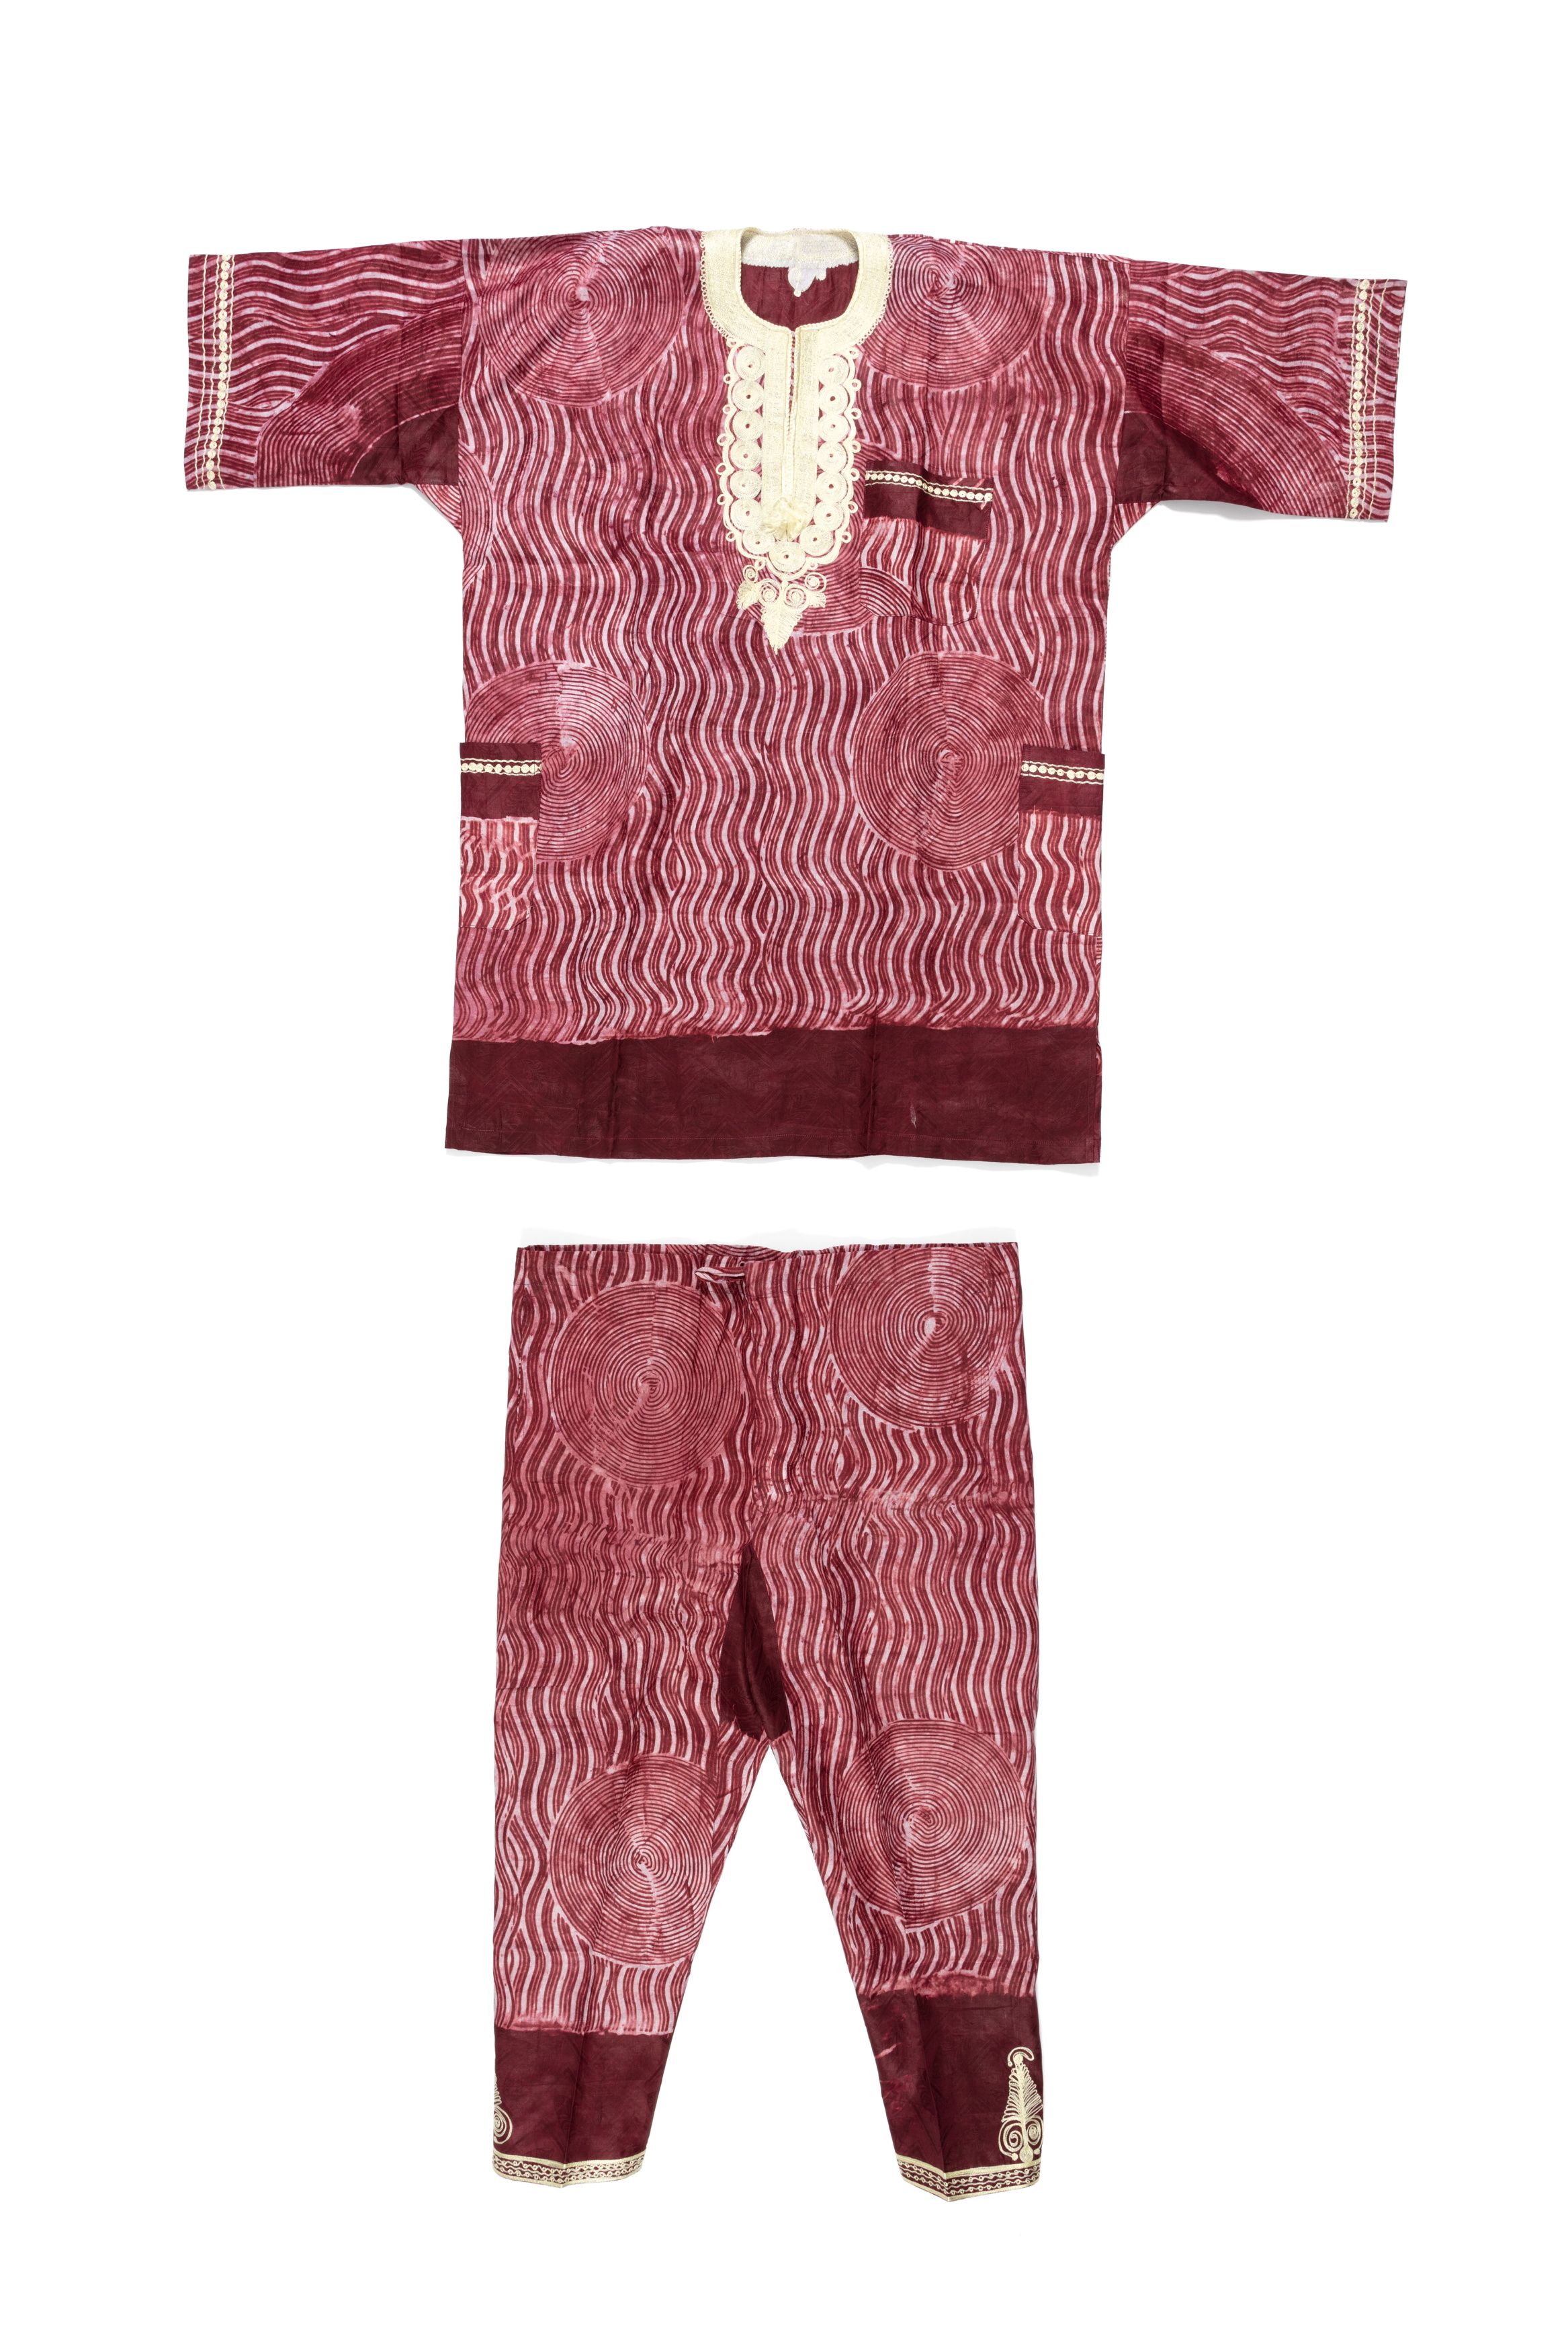 Yoruba resist-dyed tunic and pants, Nigeria